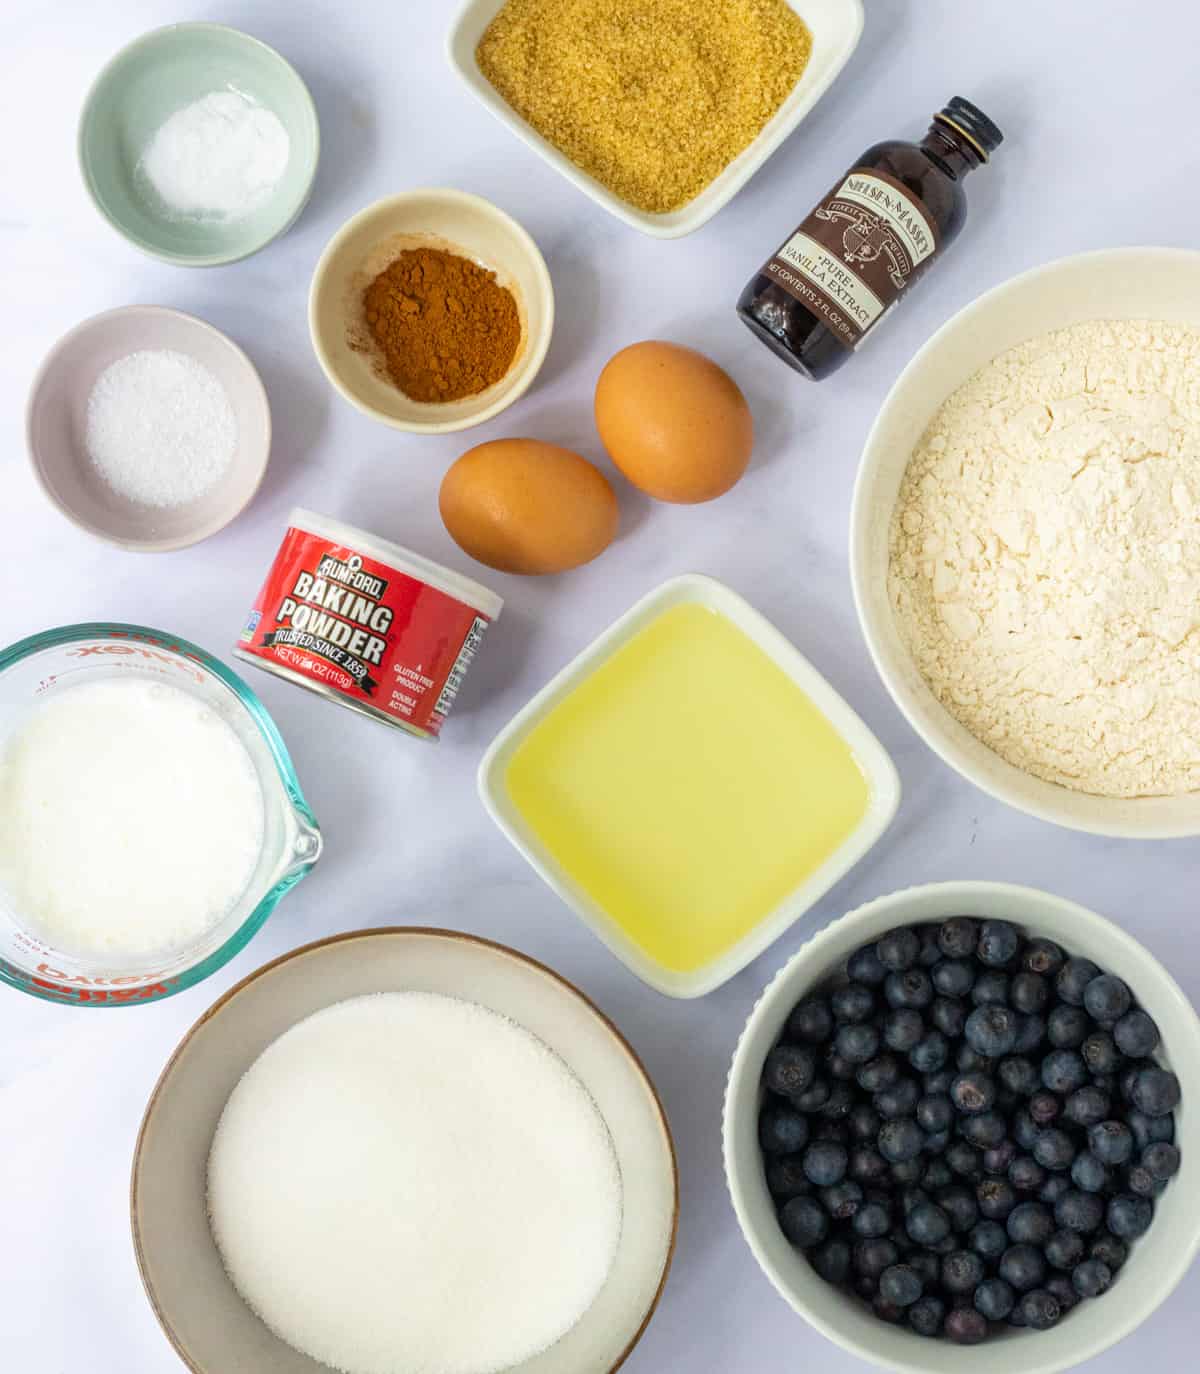 Ingredients for blueberry buttermilk muffins.